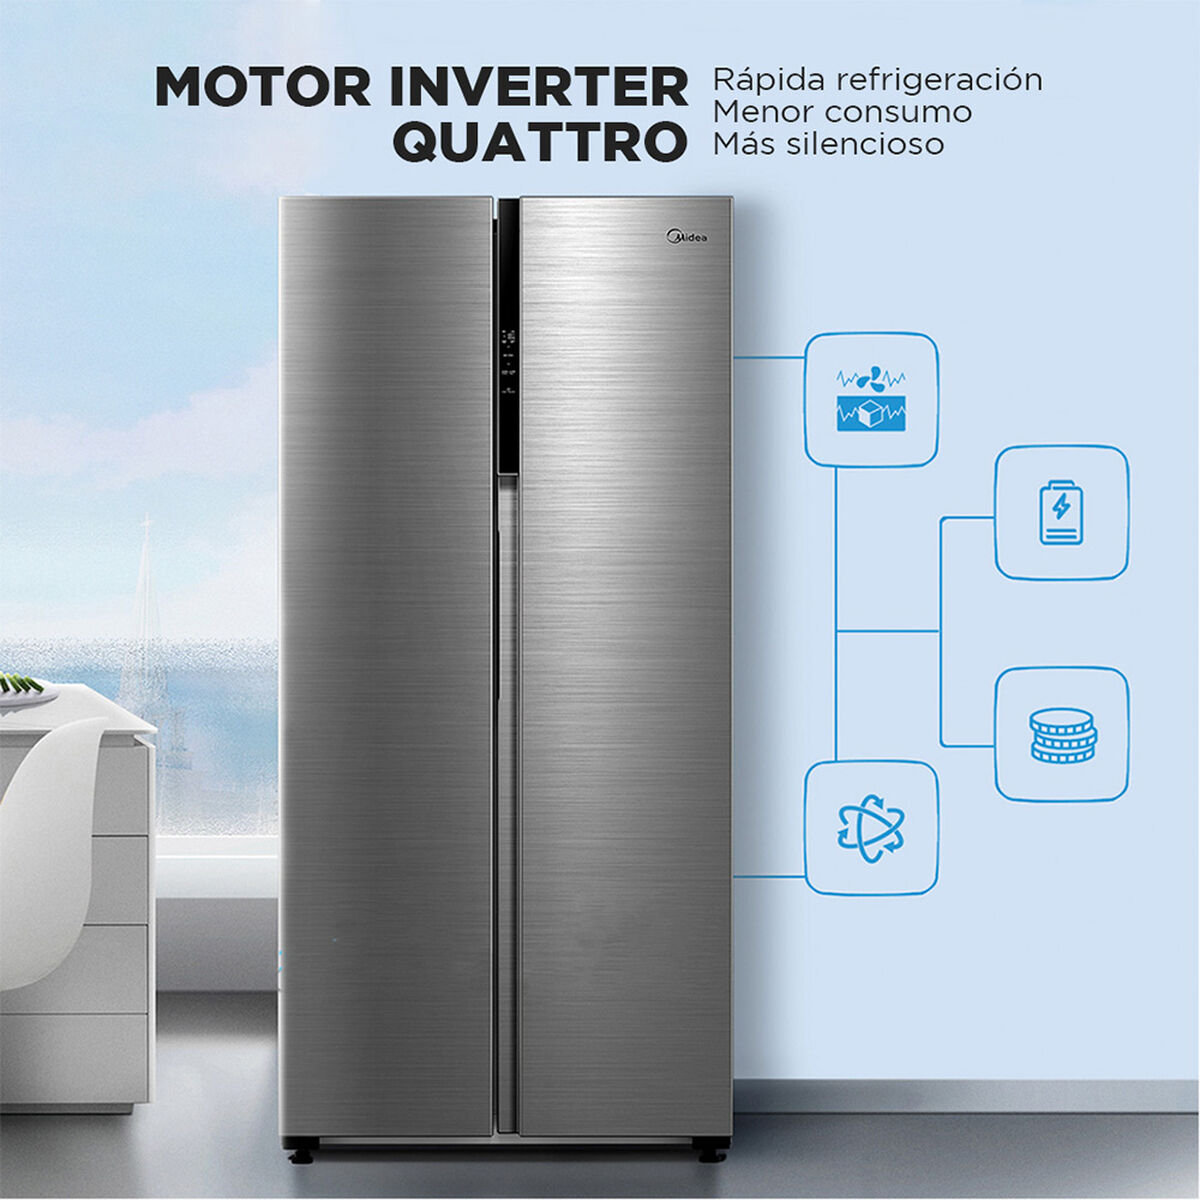 Refrigerador Side by Side Midea MDRS619FGE46 432 lts